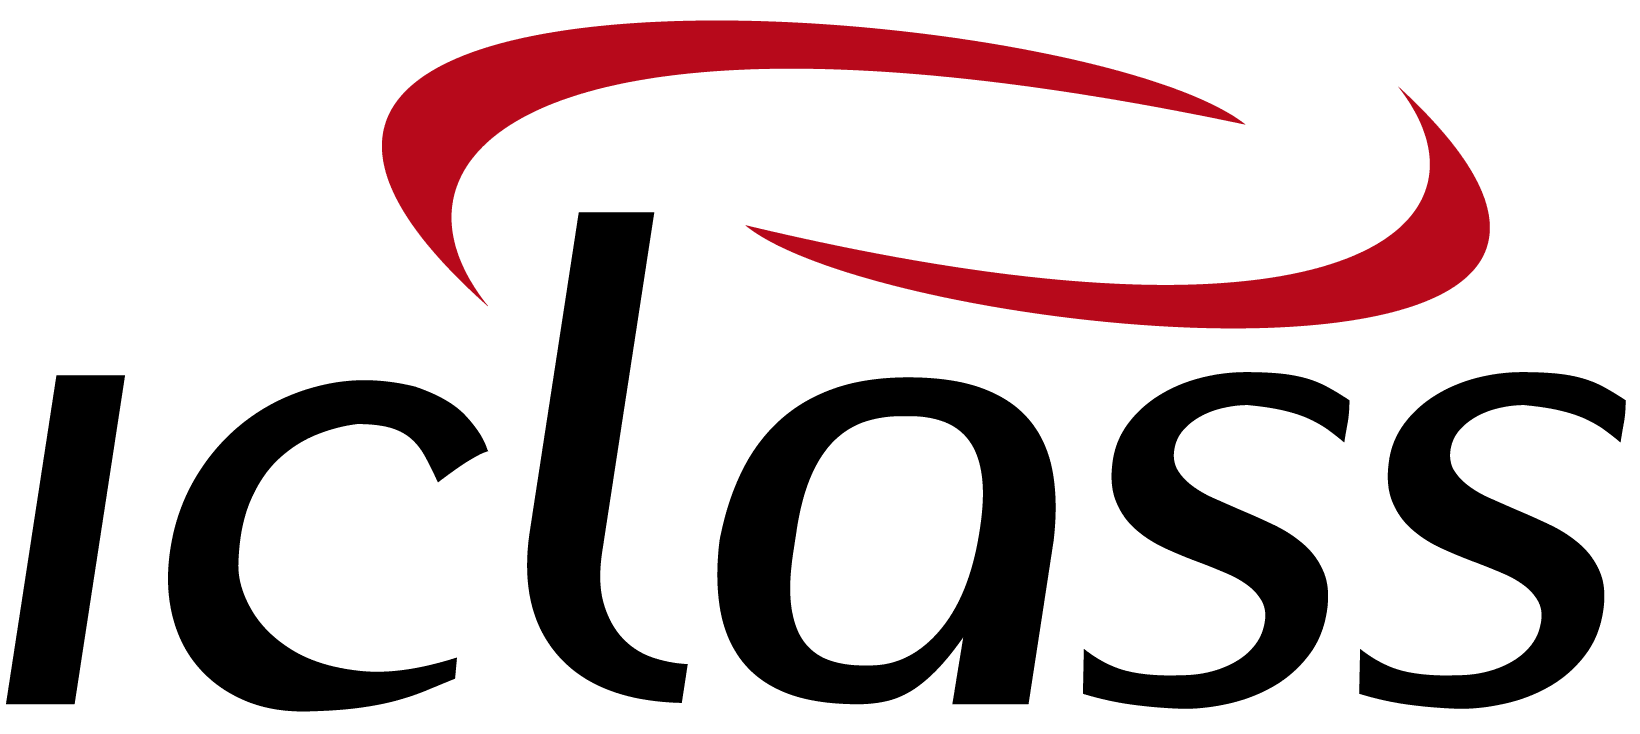 logo IClass Software de Ordem de Serviço Online Acerca